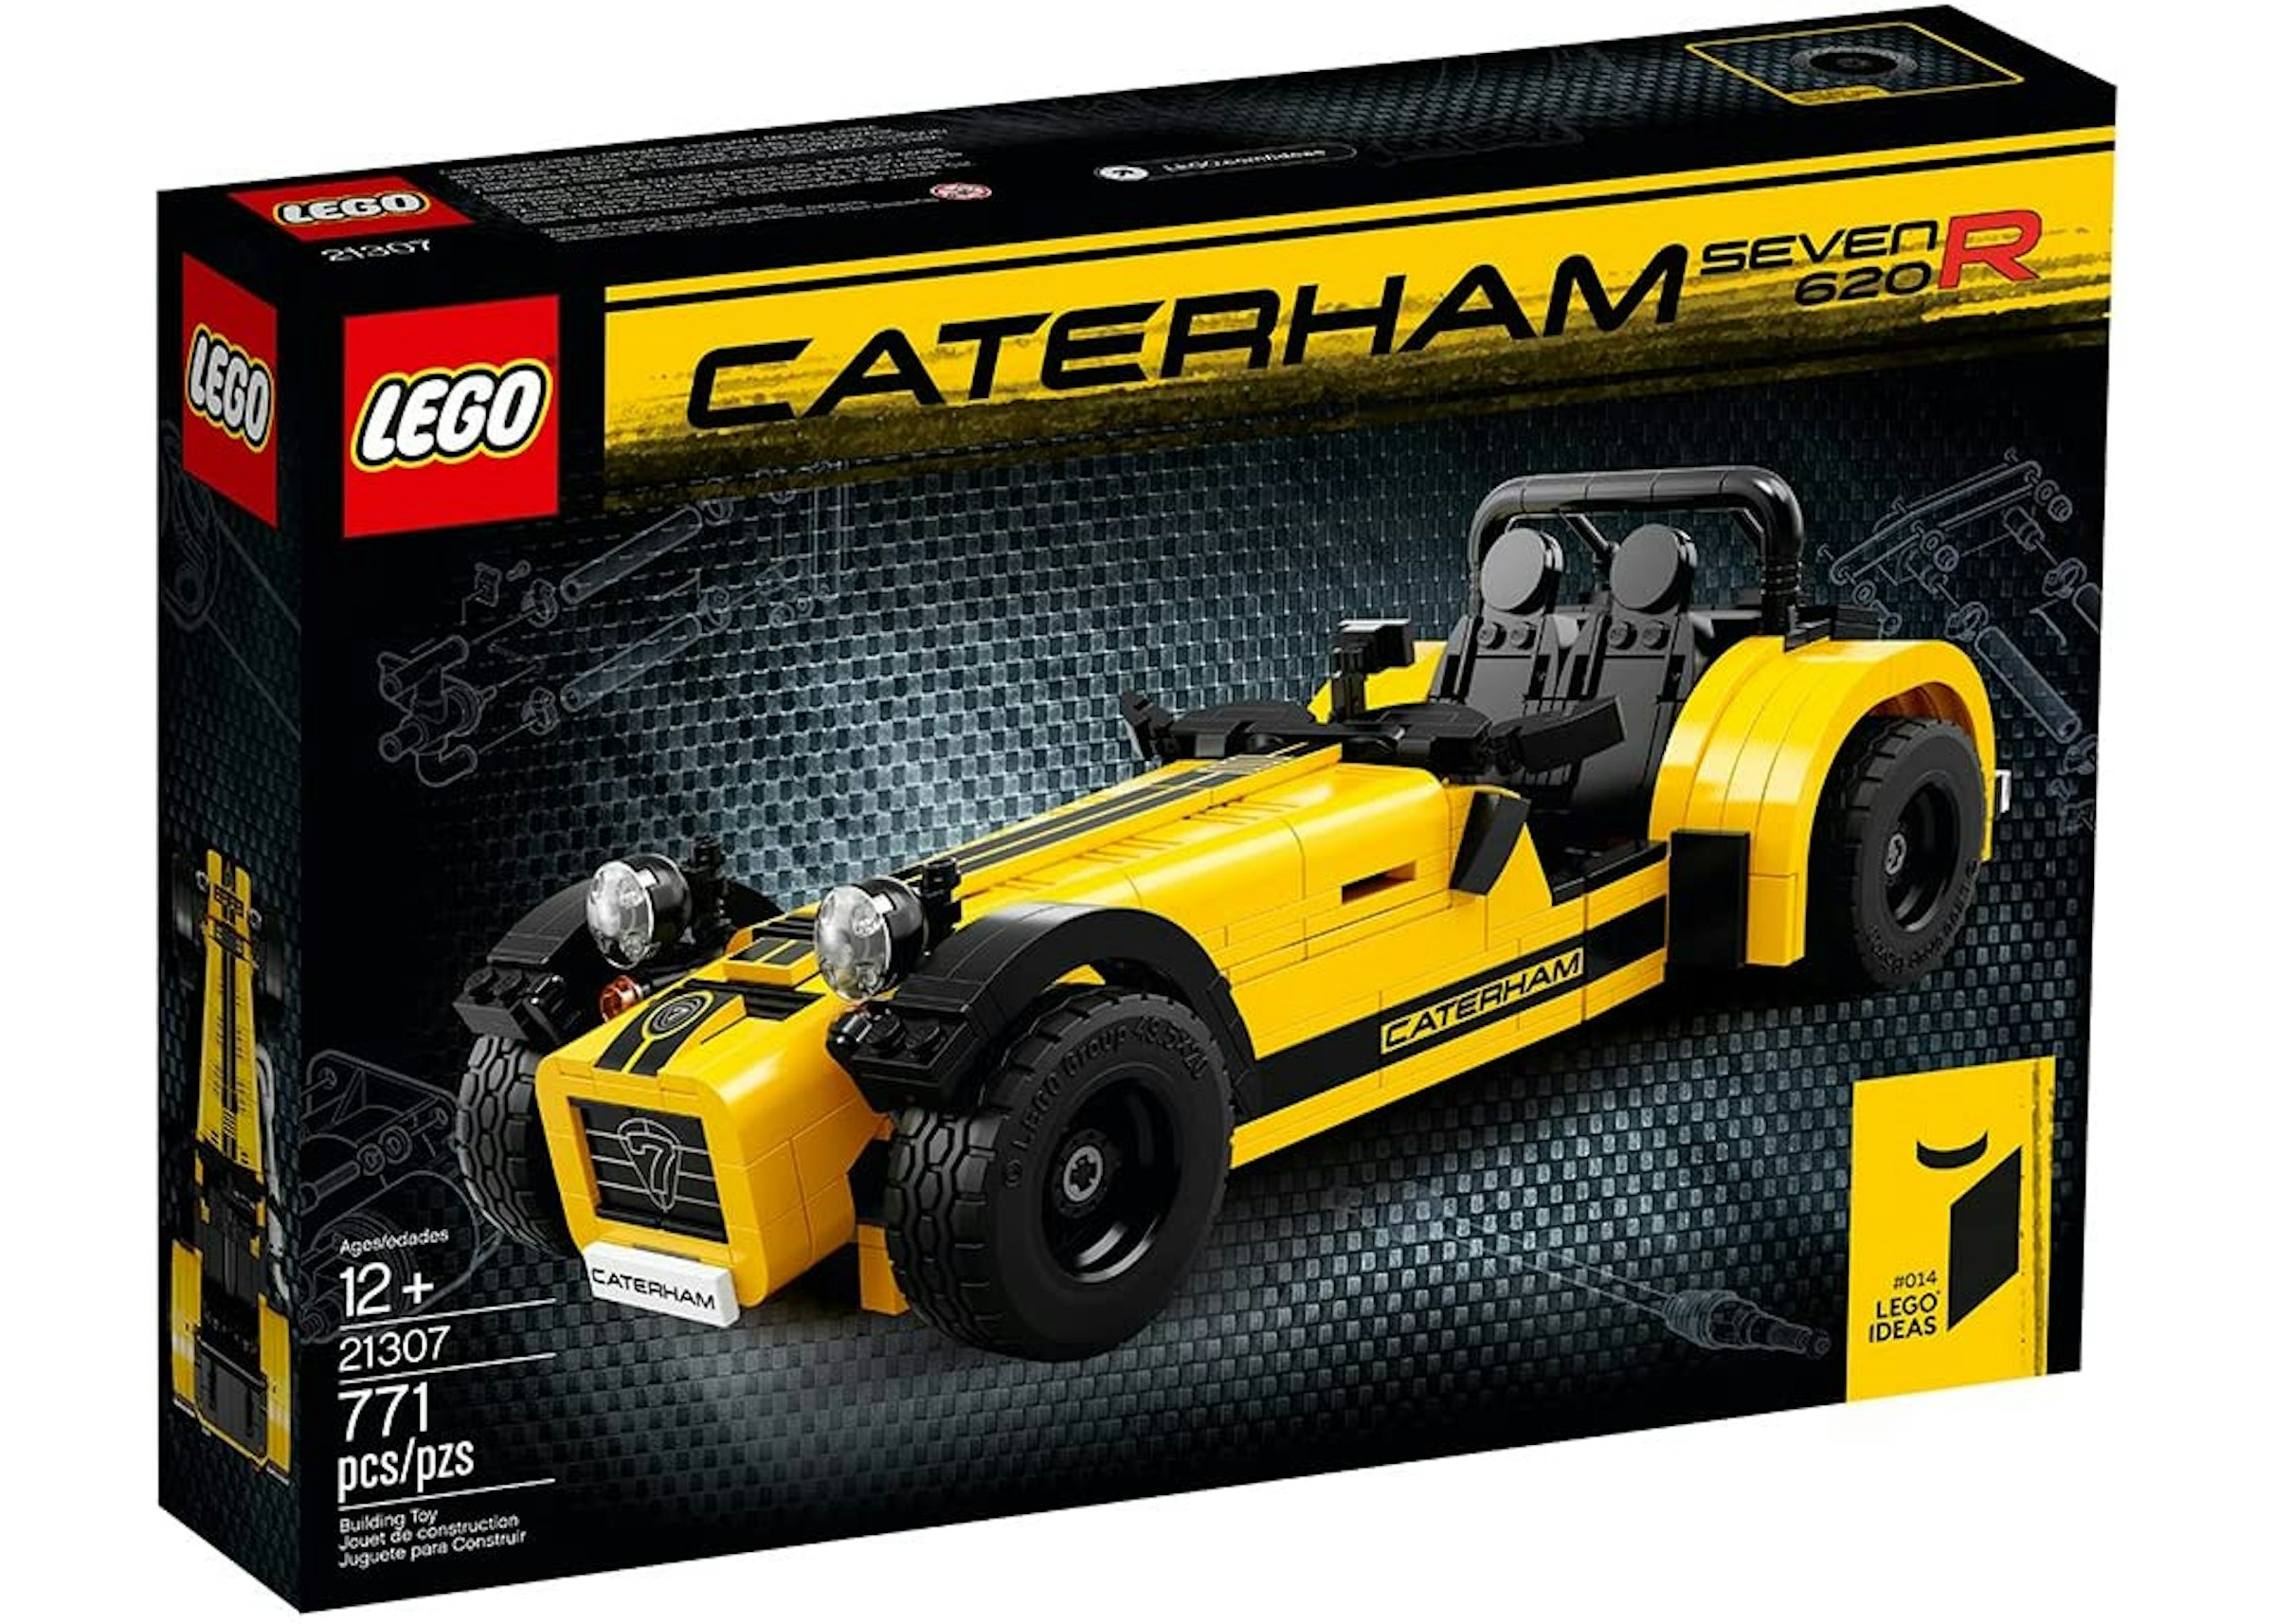 LEGO Ideas Caterham Seven 620R Set 21307 US